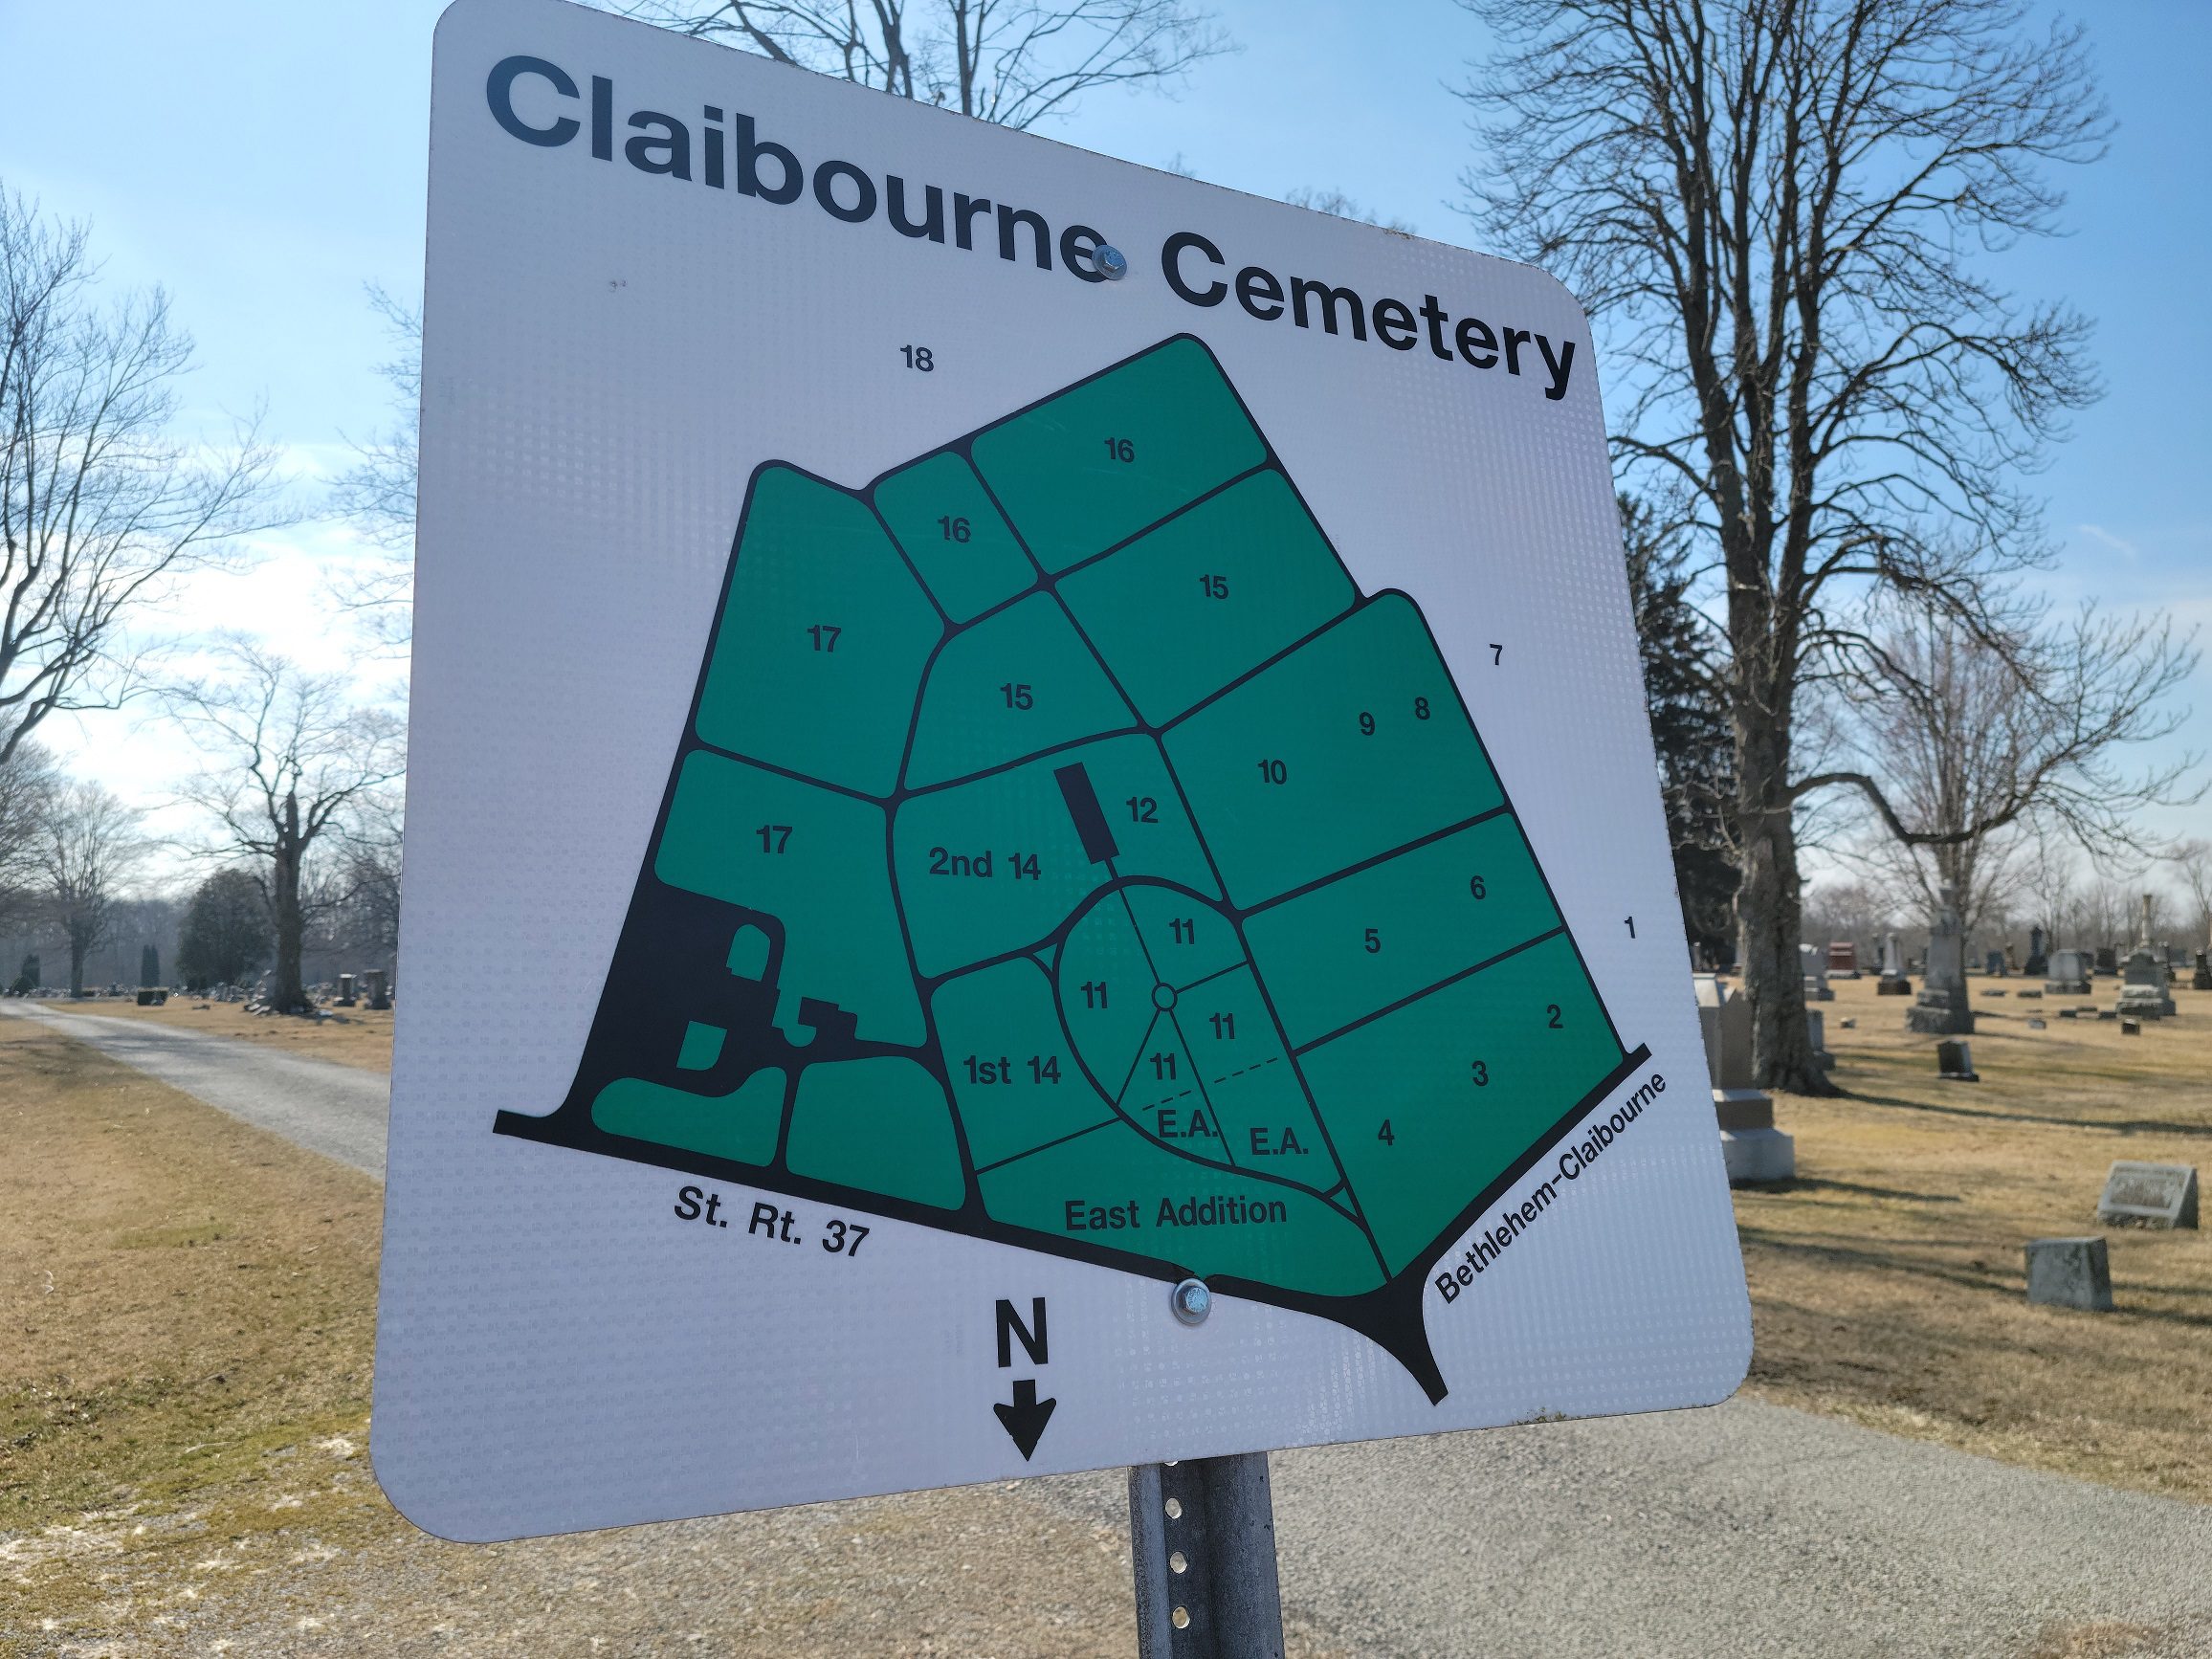 Claibourne Cemetery, Claibourne Township, Union County, Ohio.